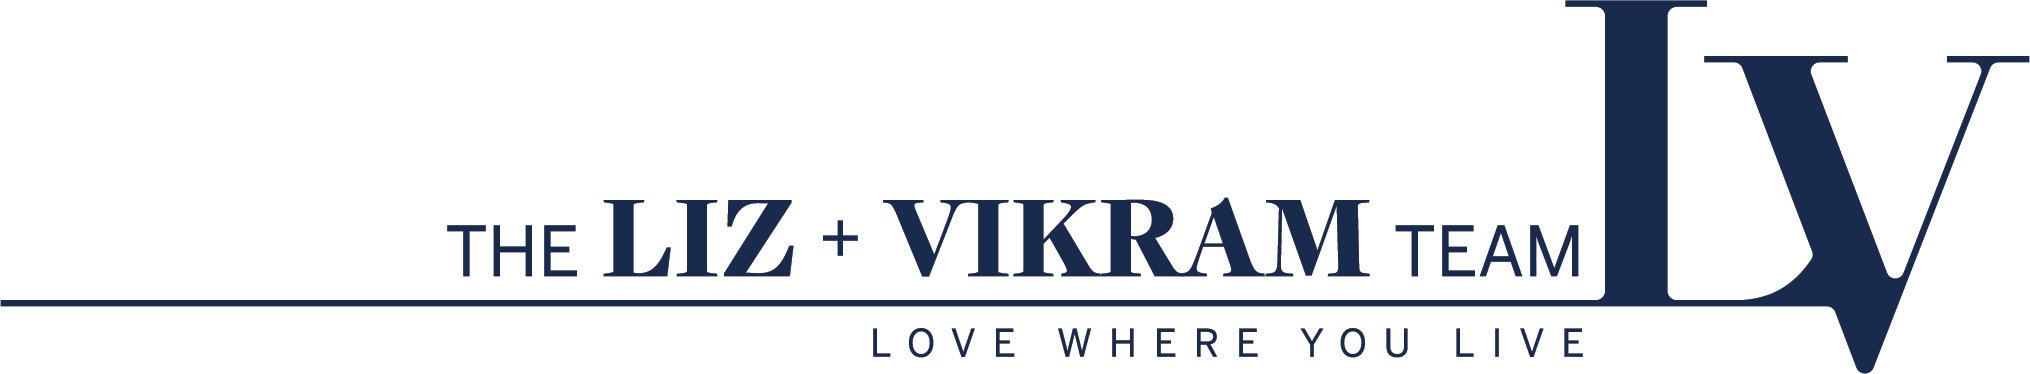 The Liz+Vikram Team